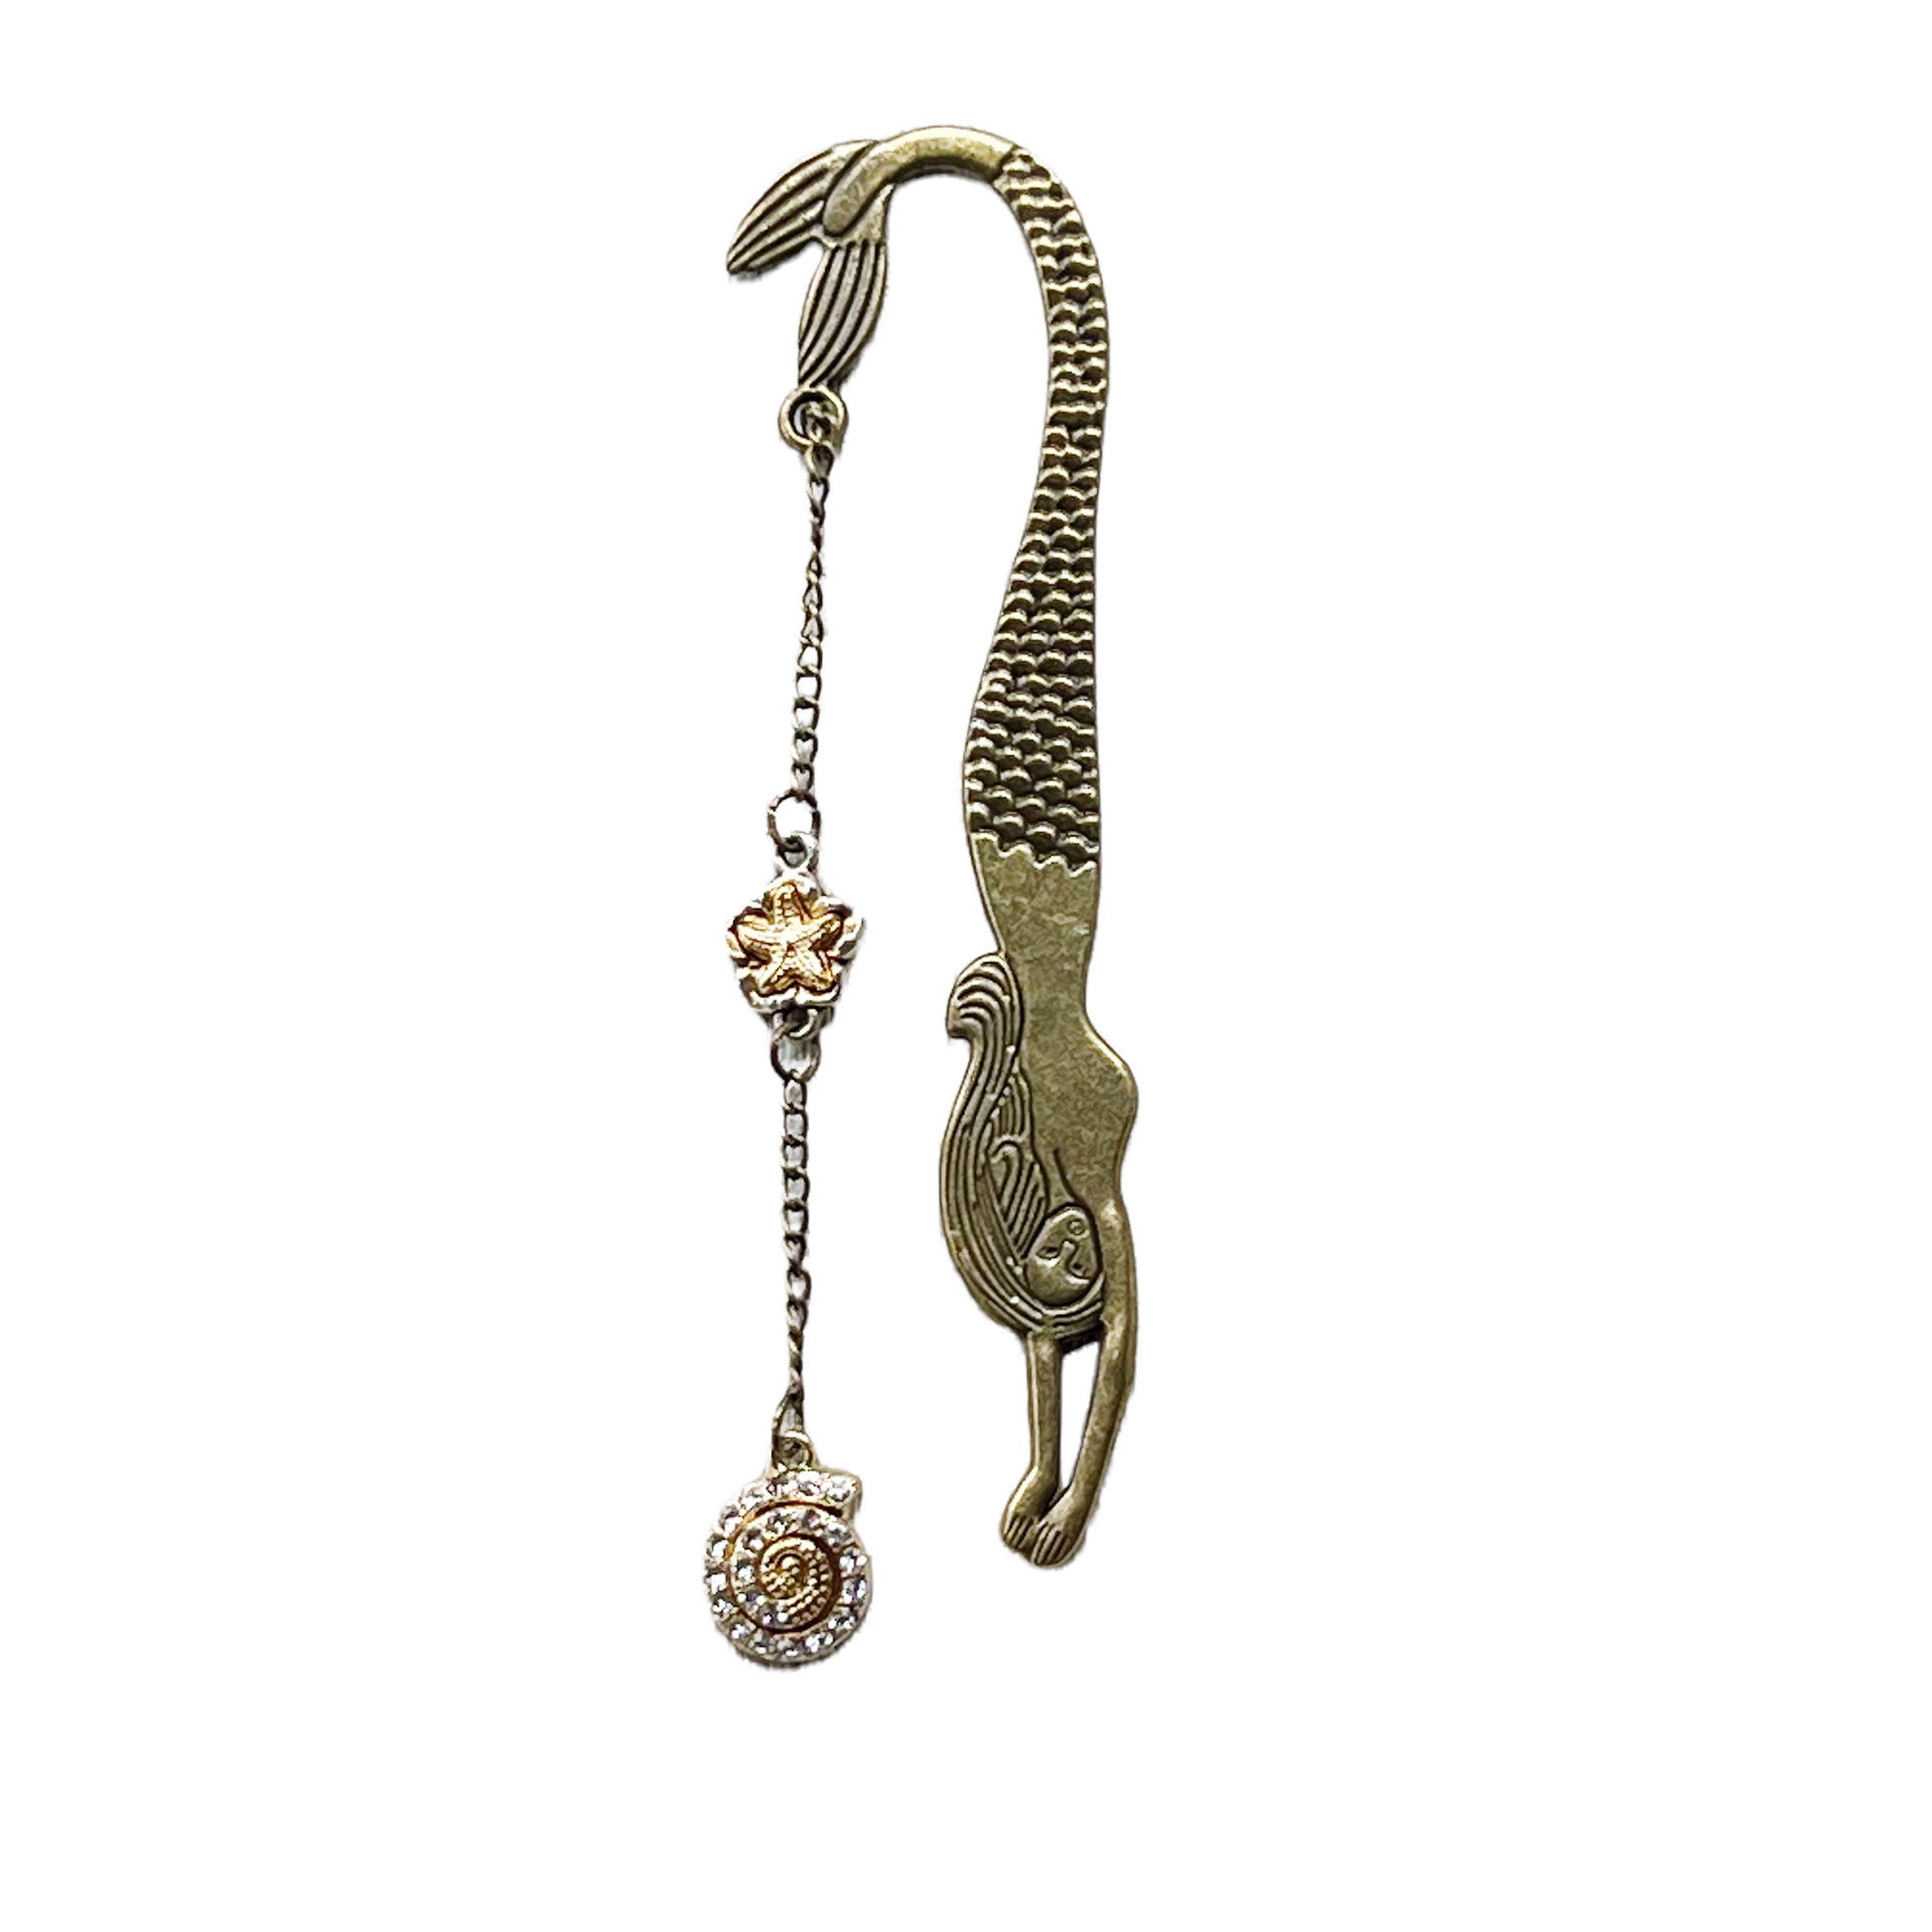 Metal Mermaid Bookmark with Seashell Dangle Chain Charm - Stylish & Unique Reading Accessory